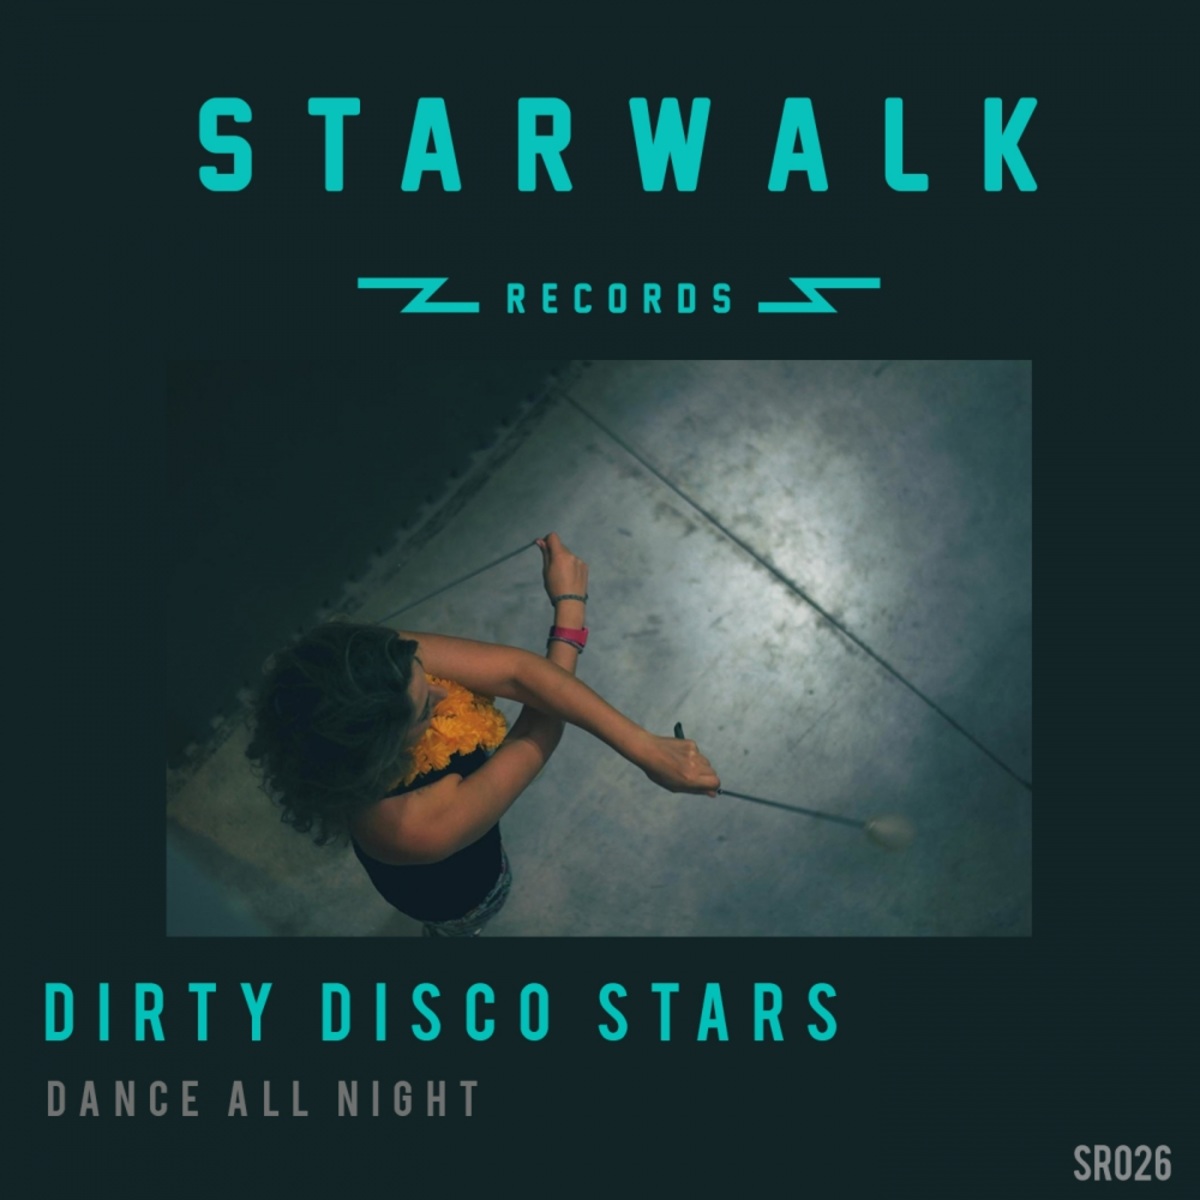 Dirty Disco Stars - Dance All Night / Starwalk Records